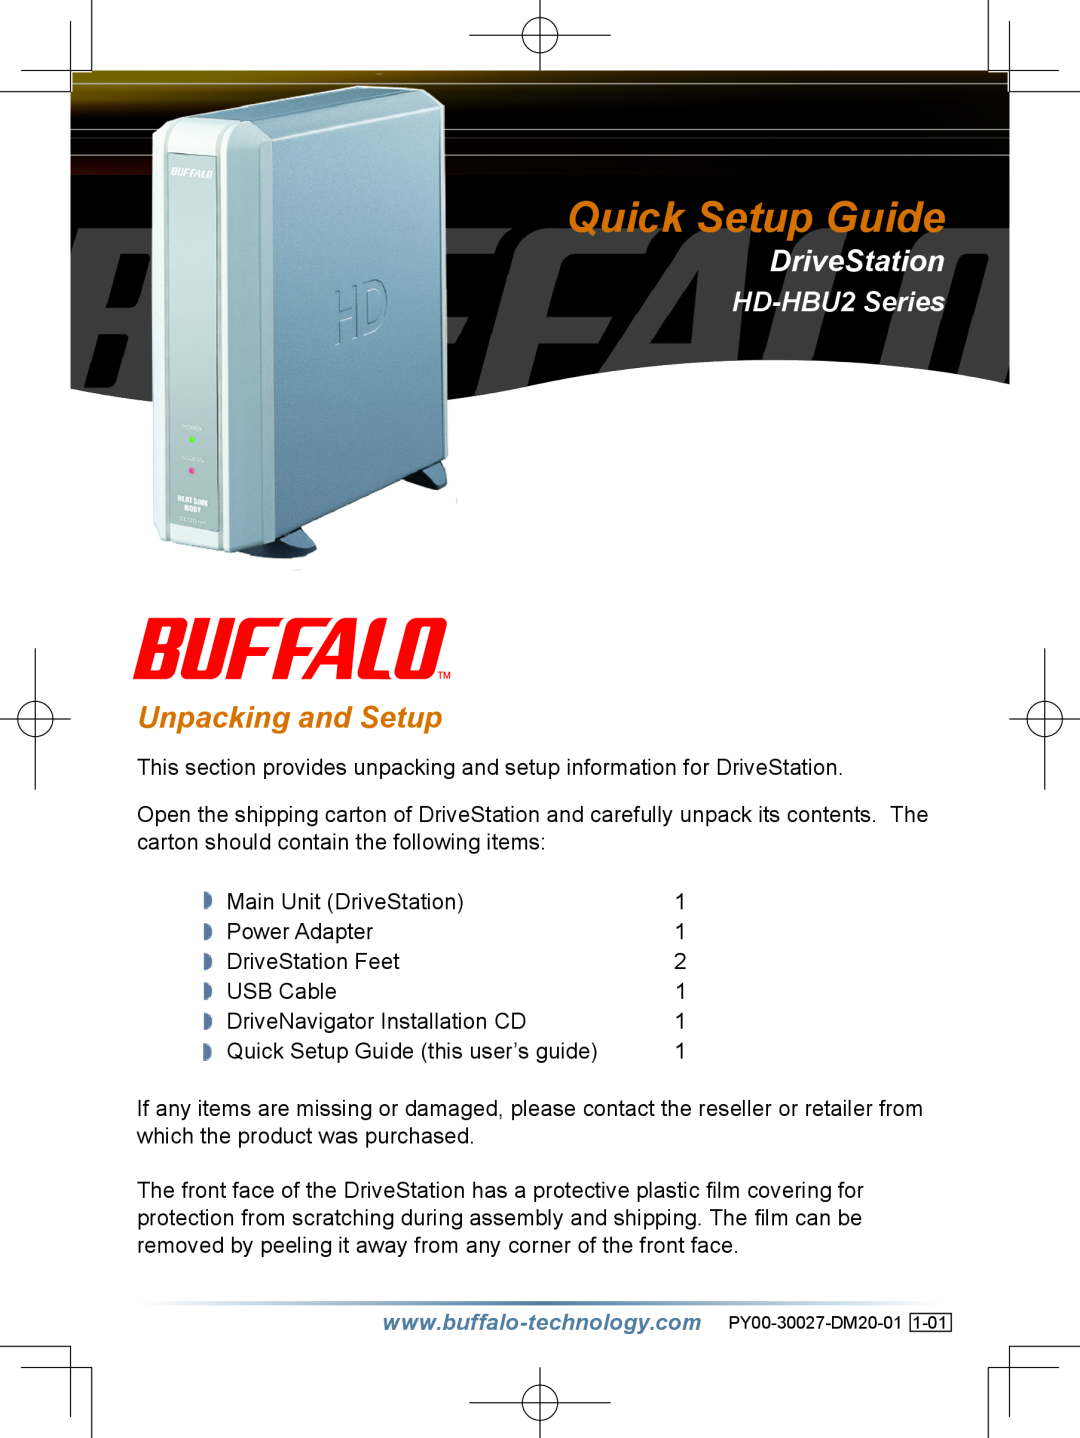 Buffalo Technology setup guide Unpacking and Setup, Quick Setup Guide, DriveStation, HD-HBU2 Series 